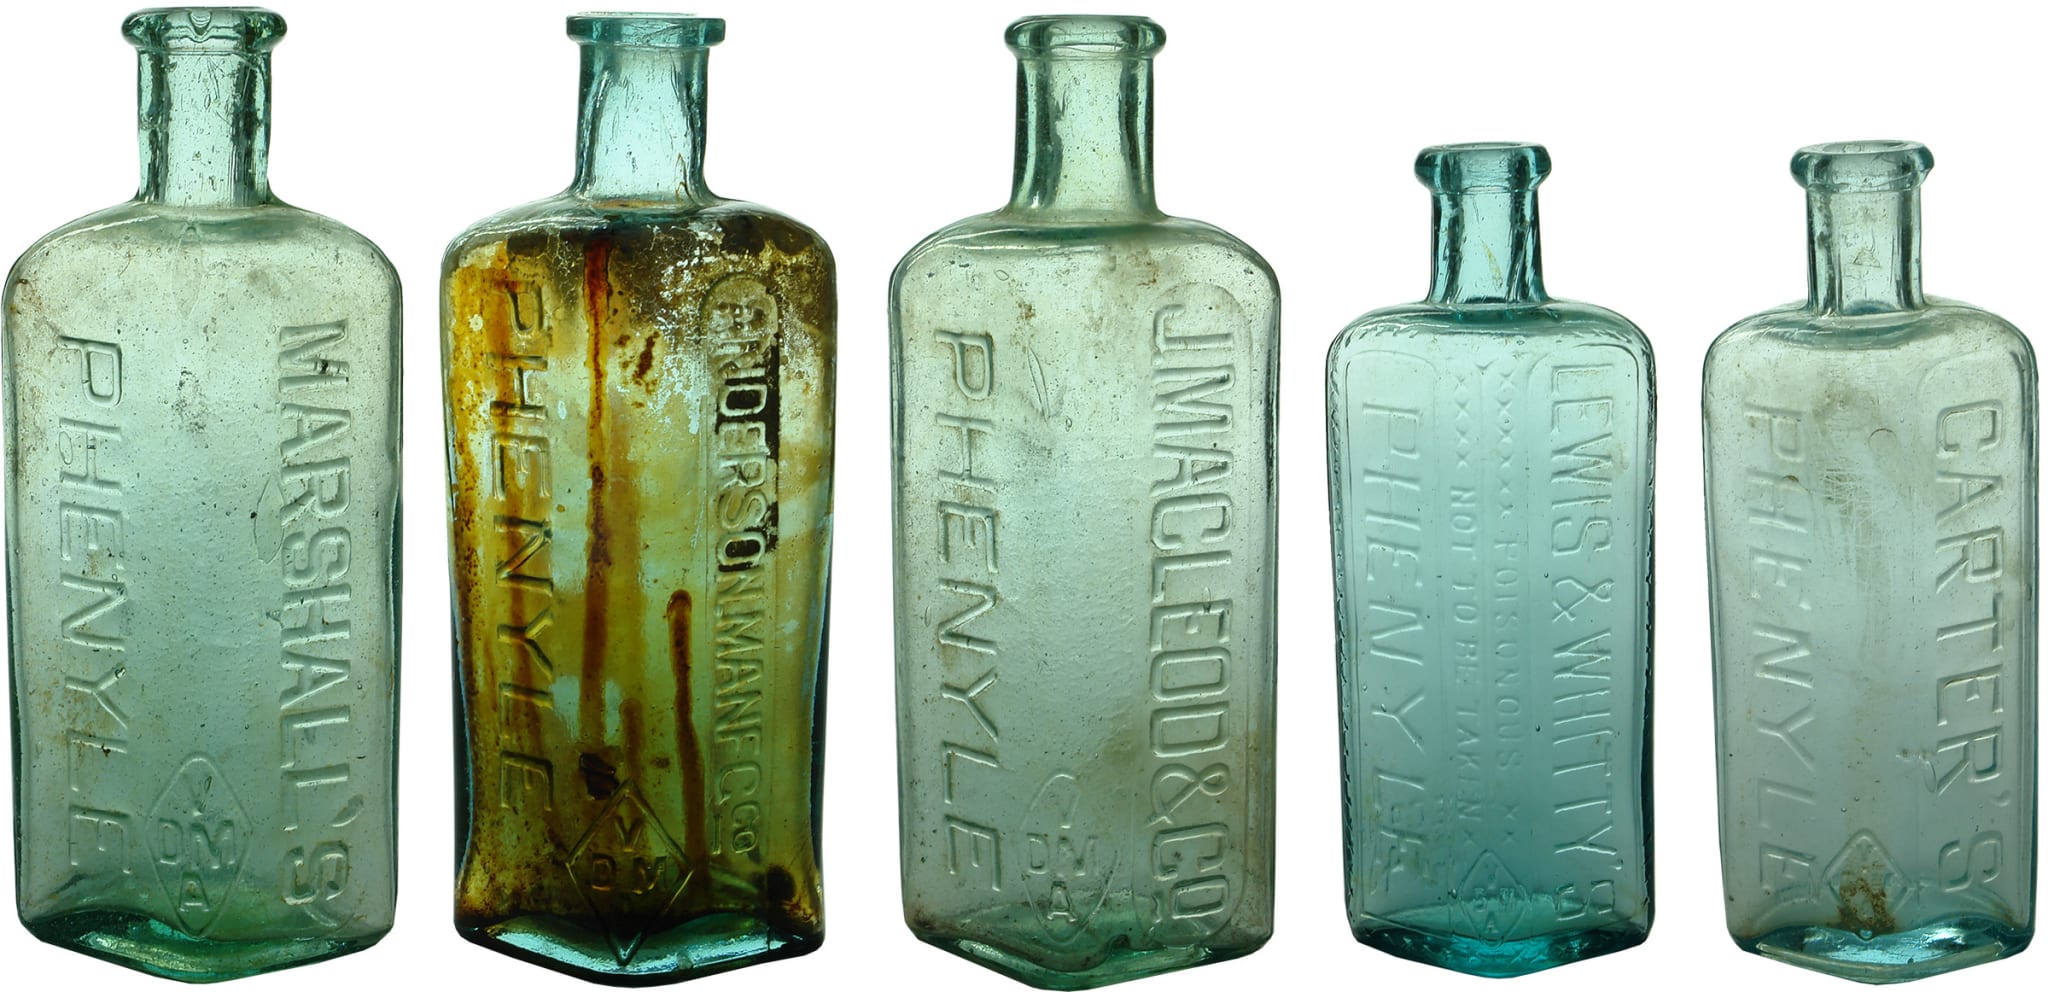 Phenyle Antique Poison Bottles